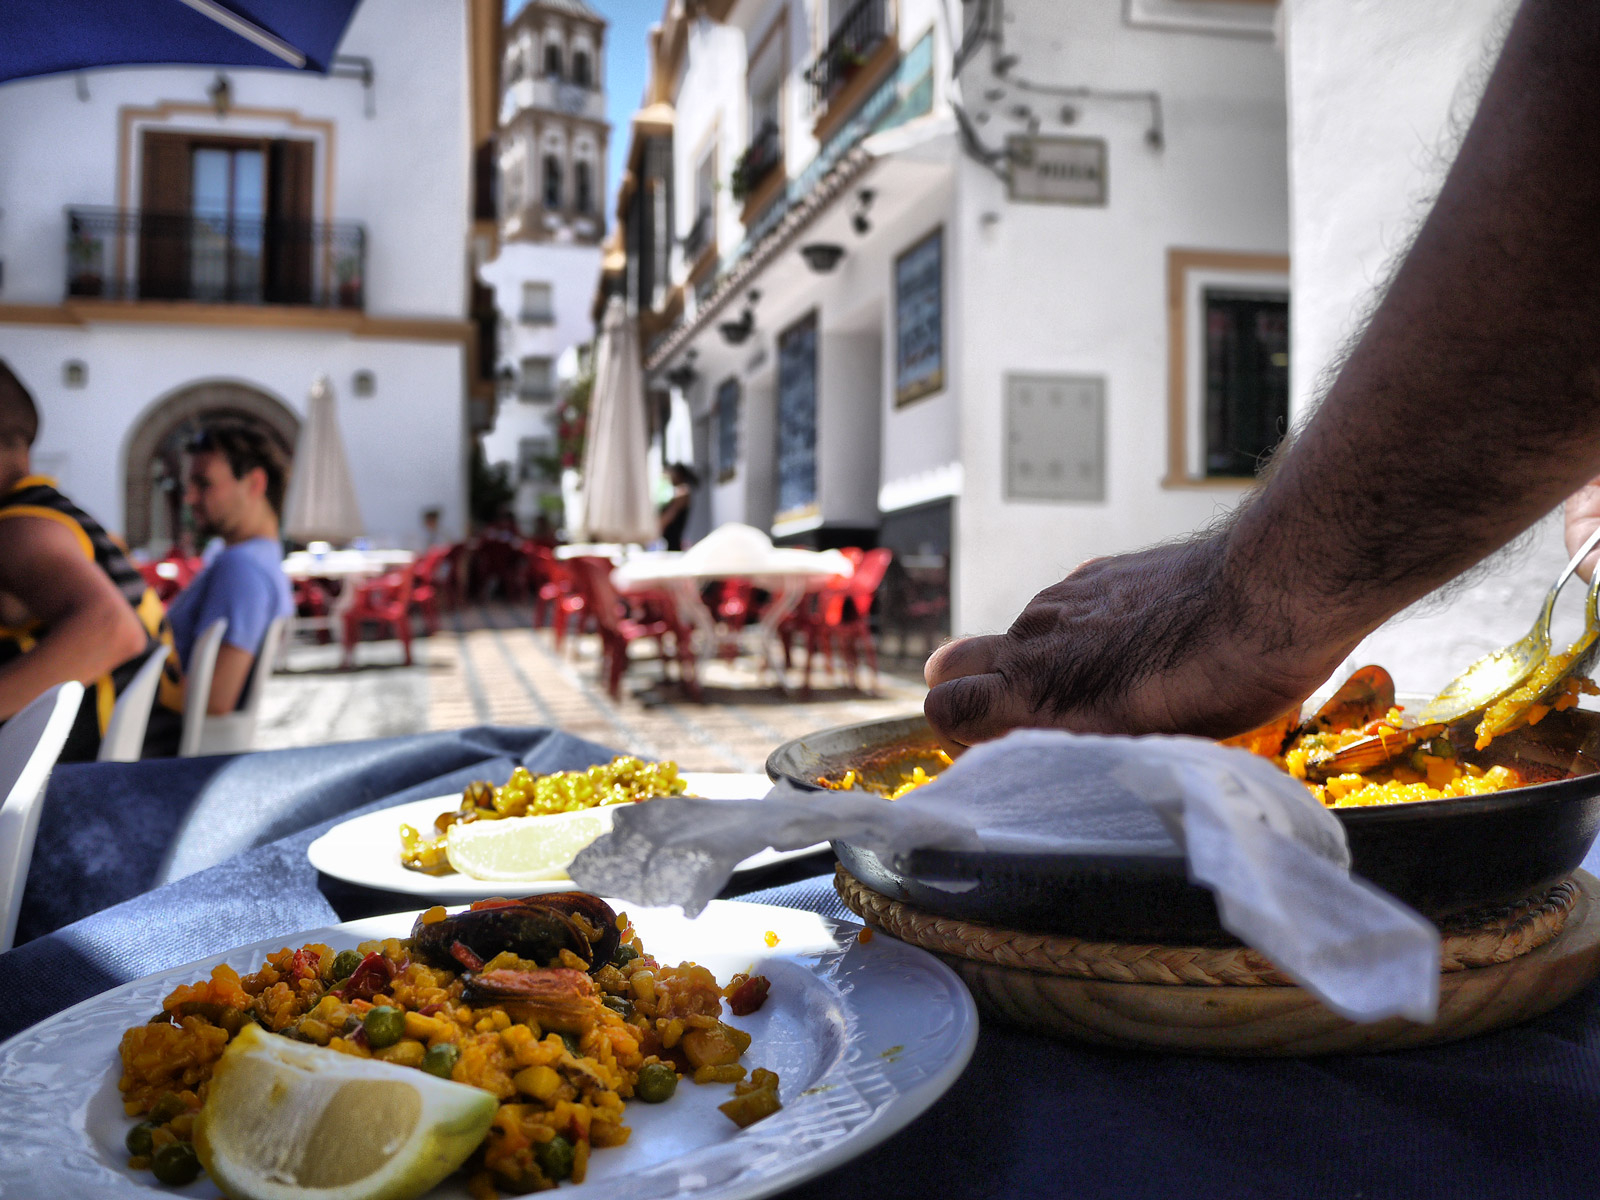 Enjoying Paella in the Old Town at El Pozo Viejo - Marbella, Spain